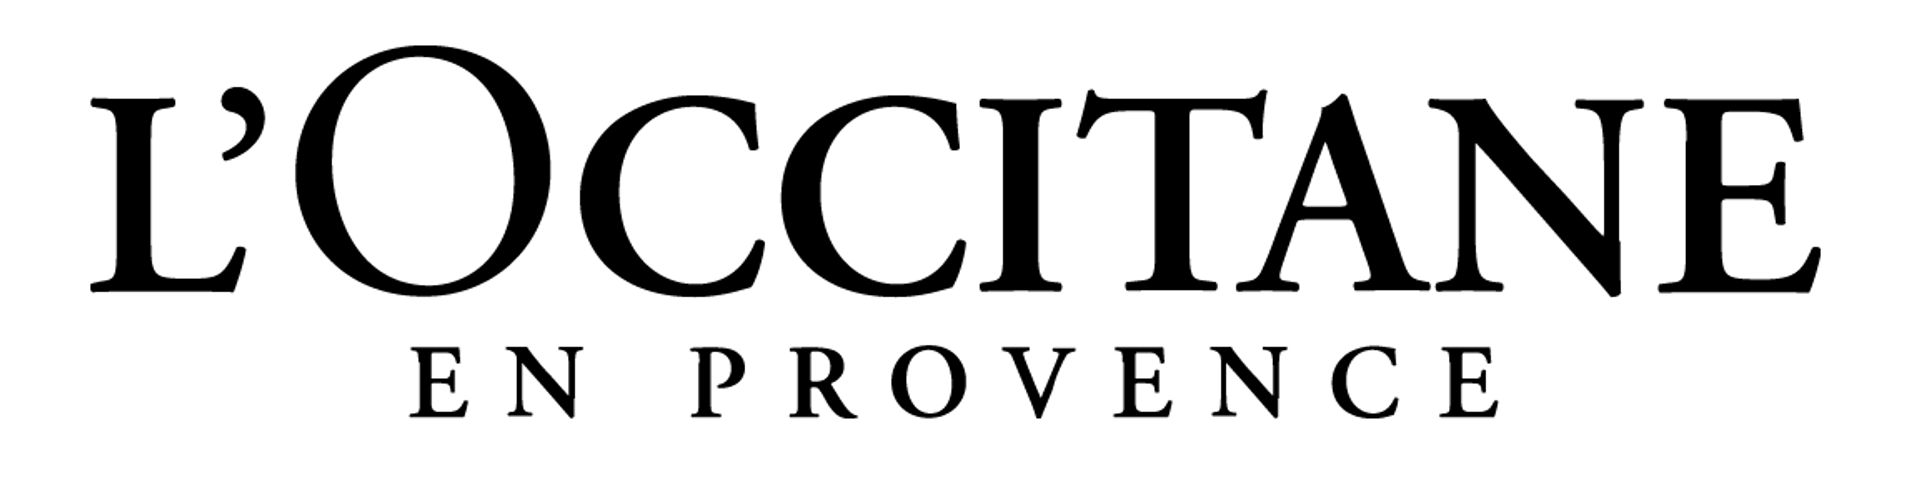 L'OCCITANE logo de circulaire